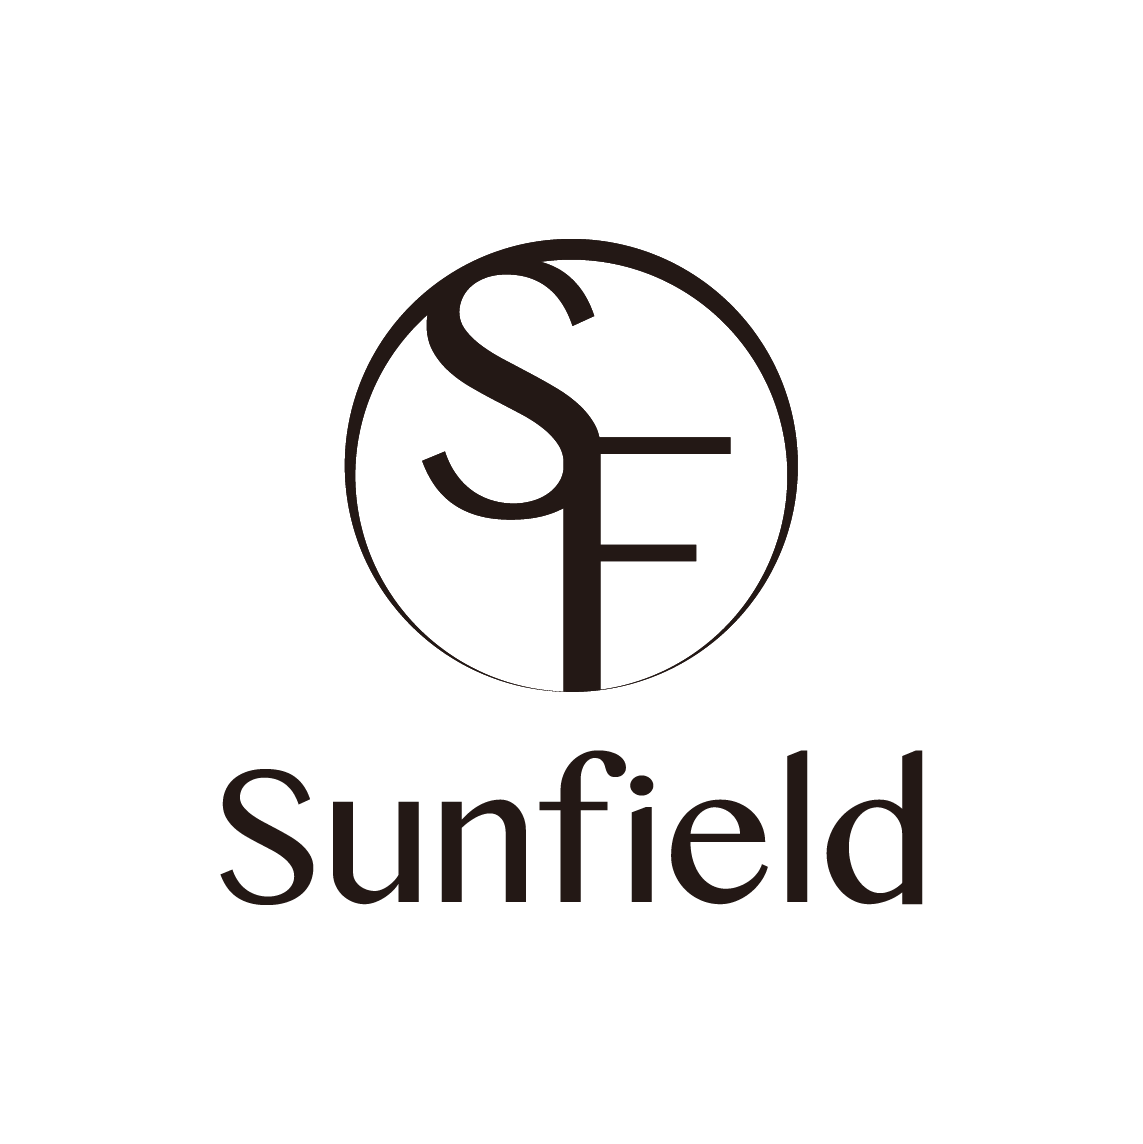 Sunfield